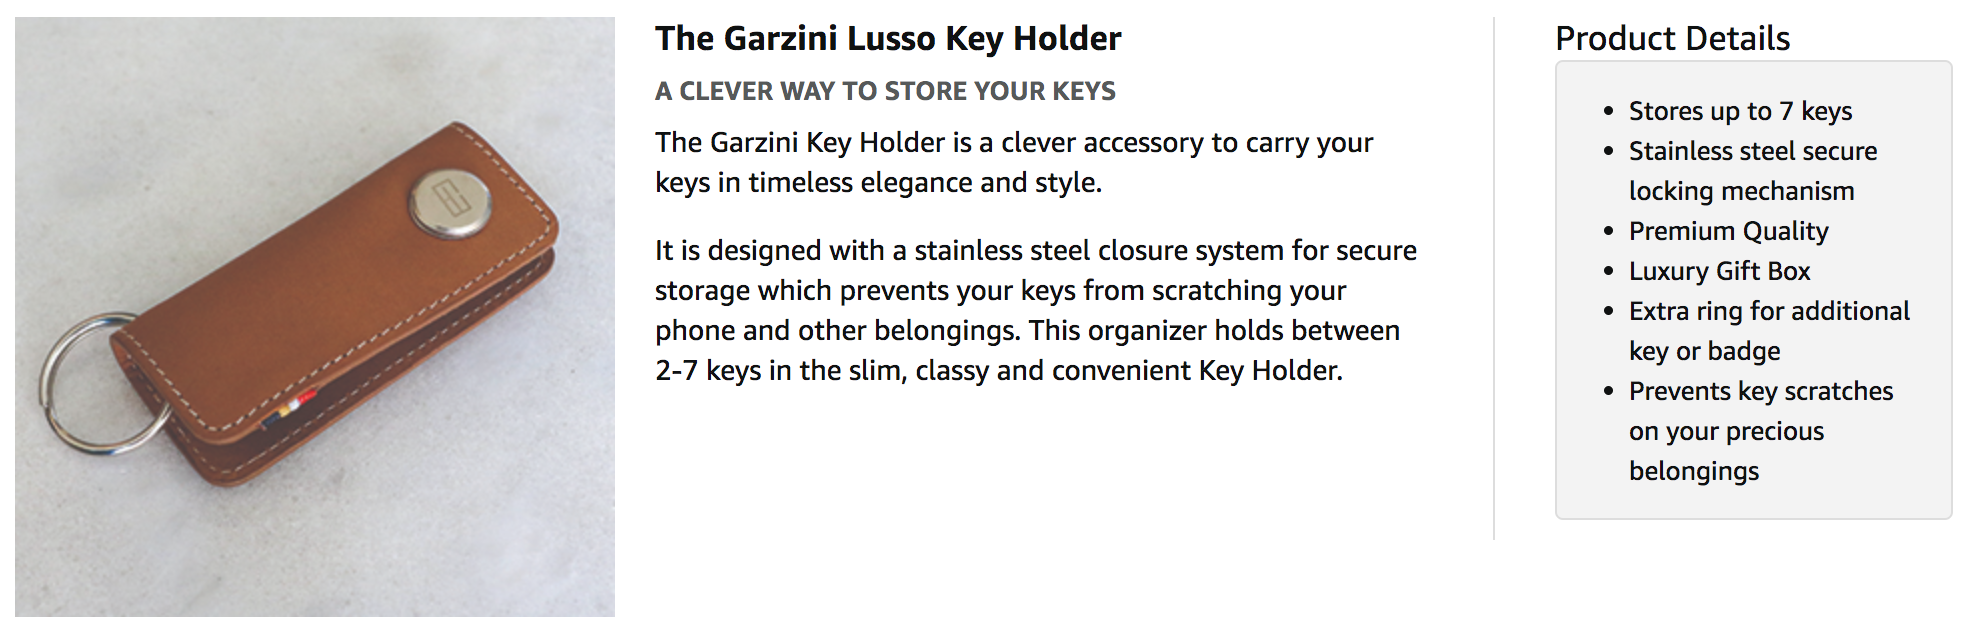 Garzini Lusso Key Holder